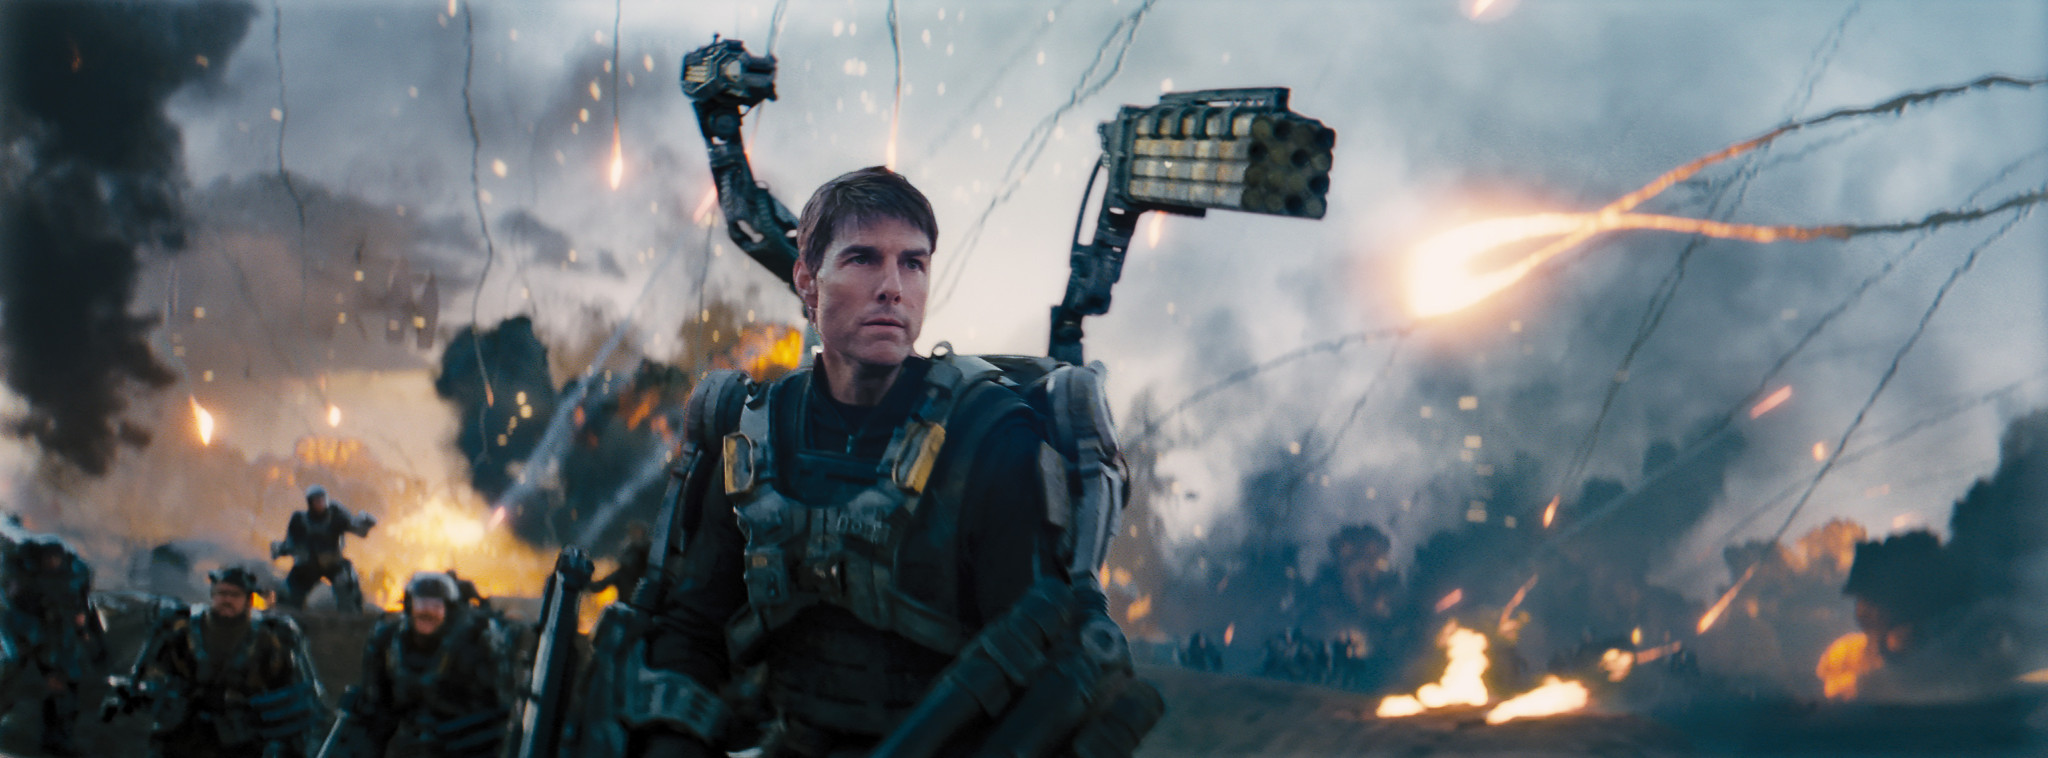 Tom Cruise in THE EDGE OF TOMORROW, via Warner Bros.